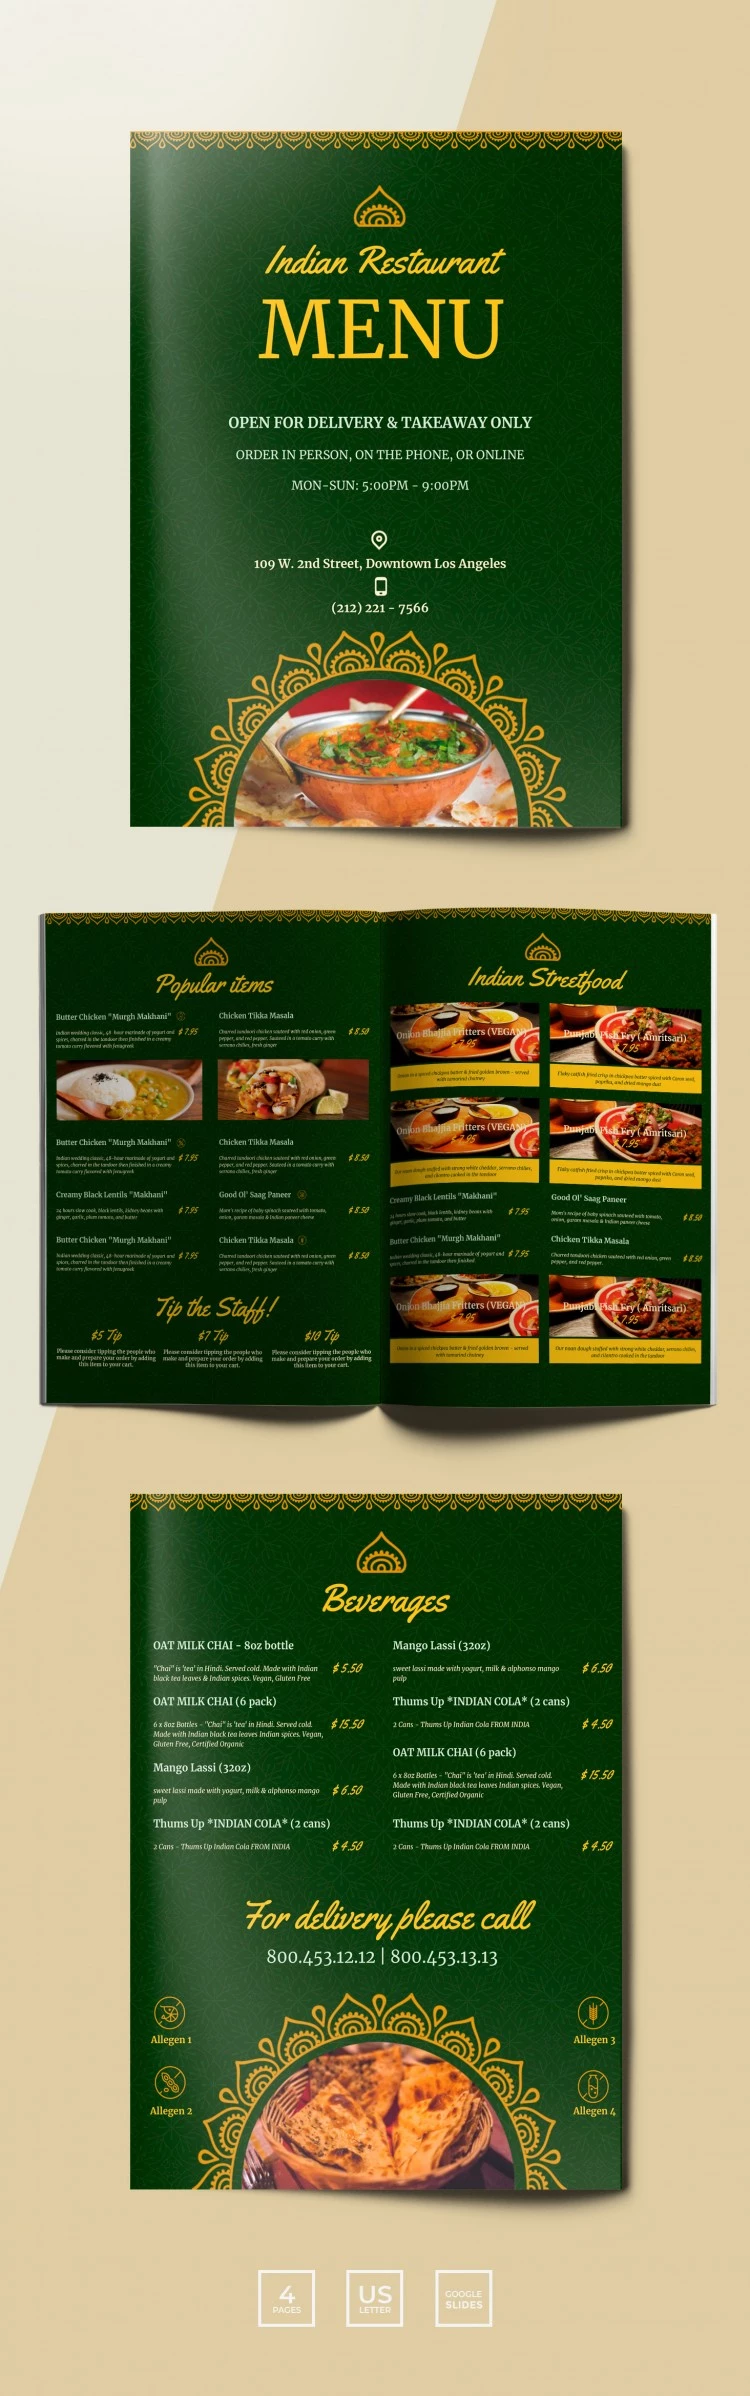 Menu du restaurant traditionnel indien - free Google Docs Template - 10061705